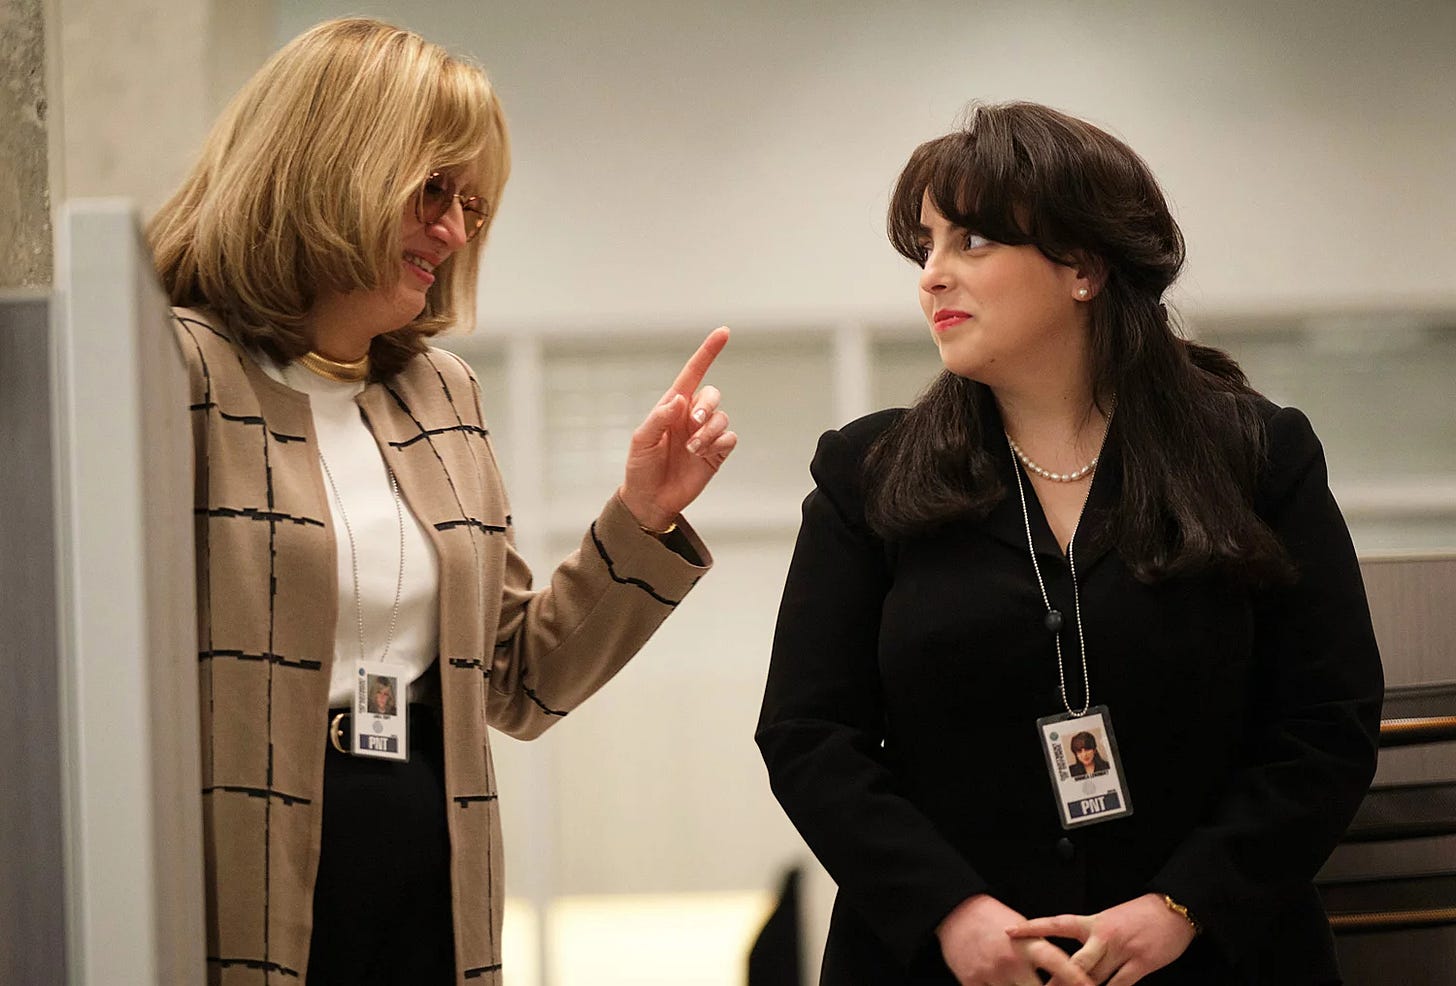 Sarah Paulson as Linda Tripp and Beanie Feldstein as Monica Lewinsky in a still from Impeachment: American Crime Story